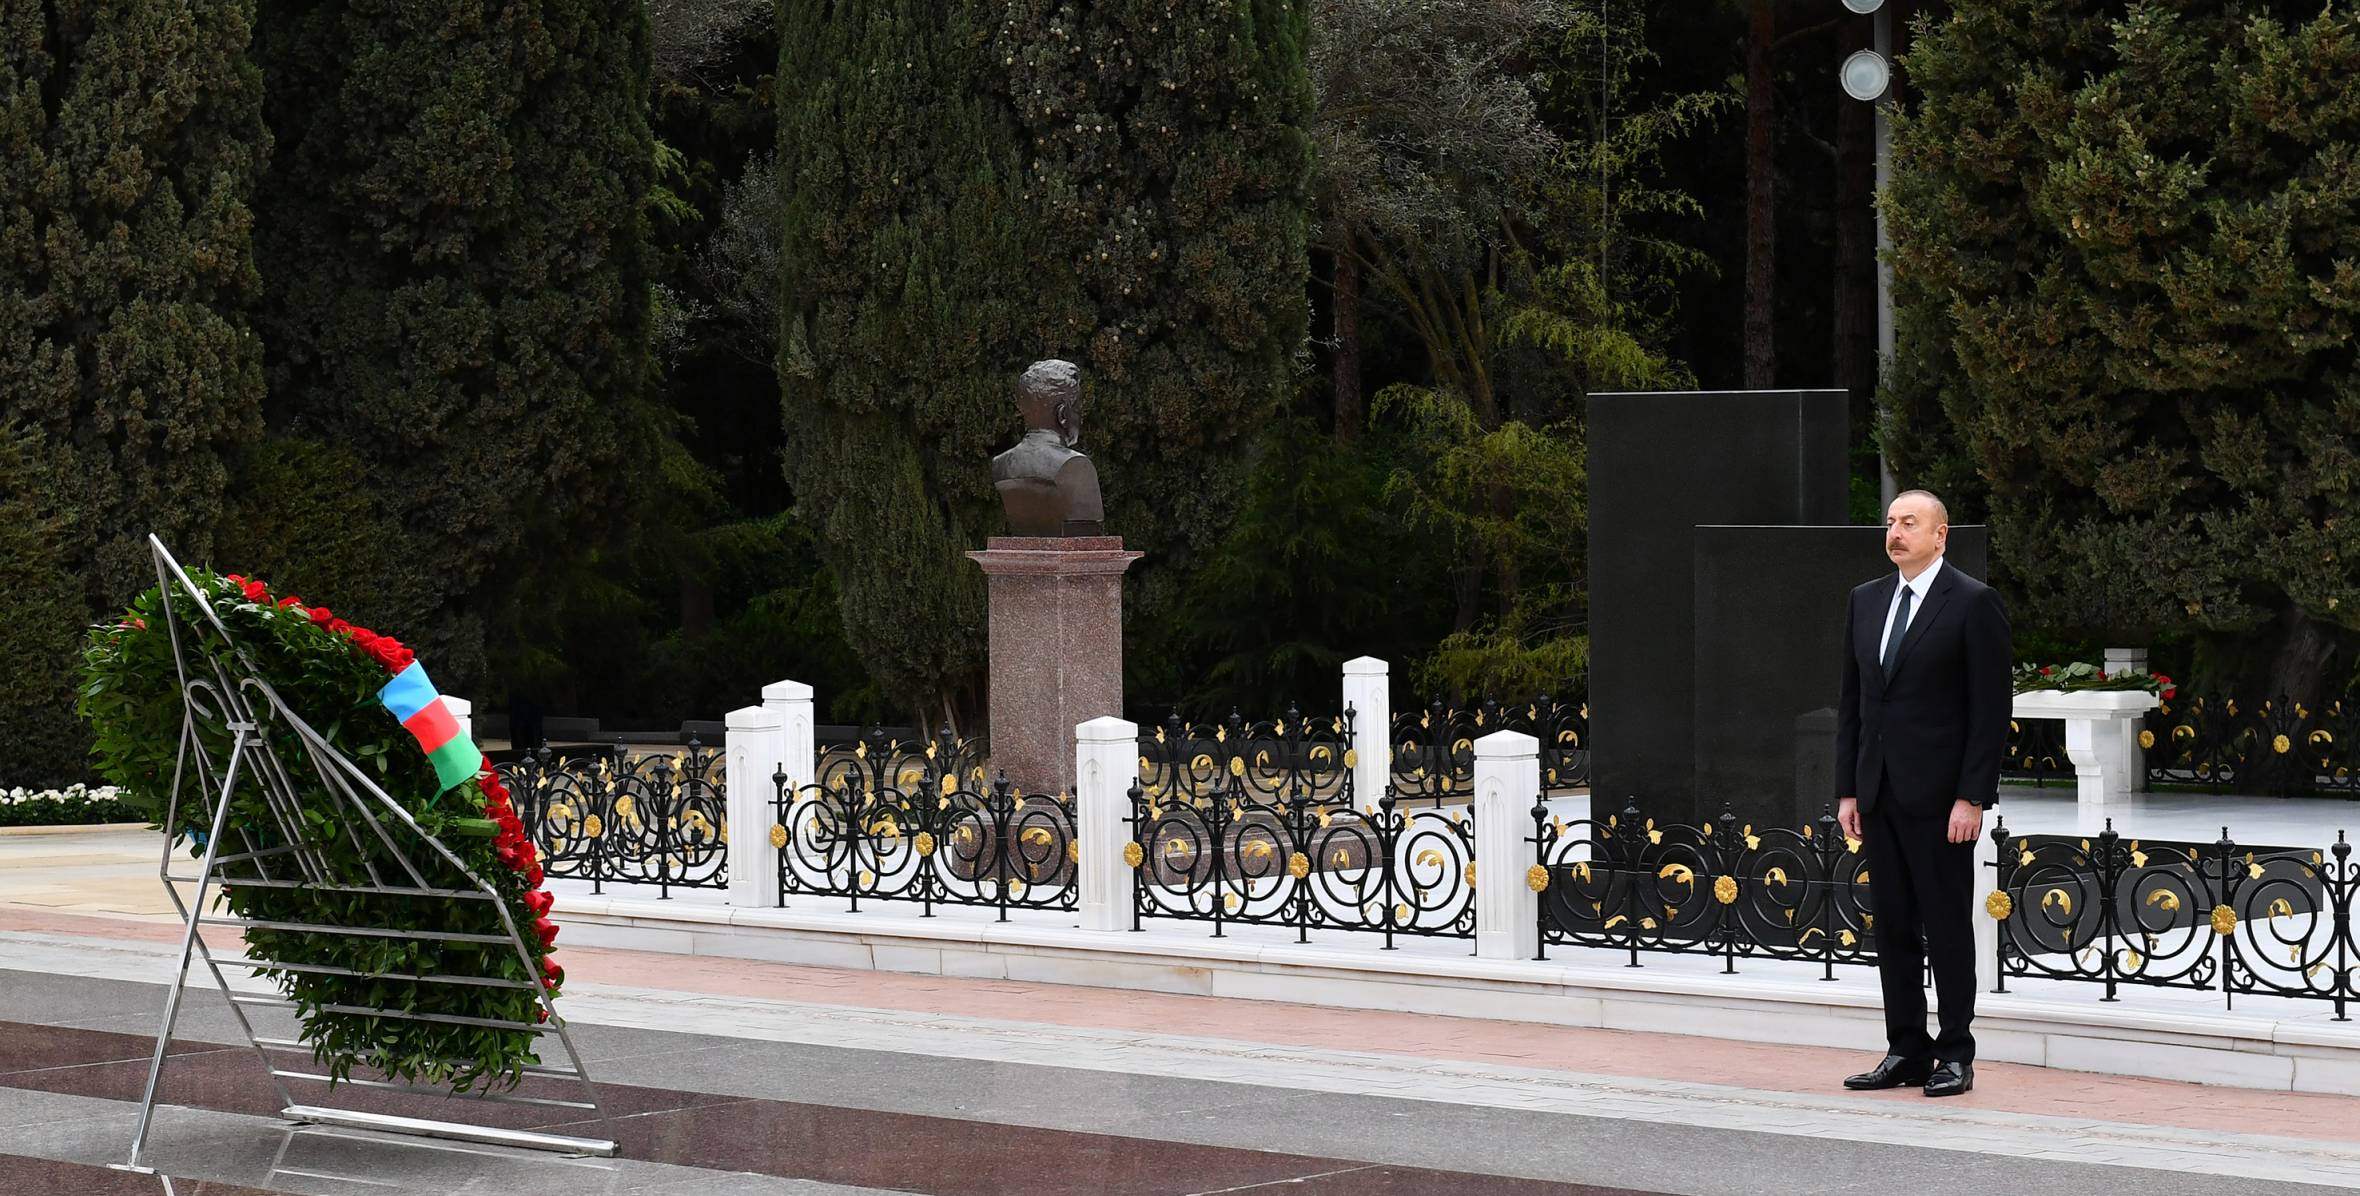 Ilham Aliyev and First Lady Mehriban Aliyeva visited tomb of national leader Heydar Aliyev in Alley of Honors